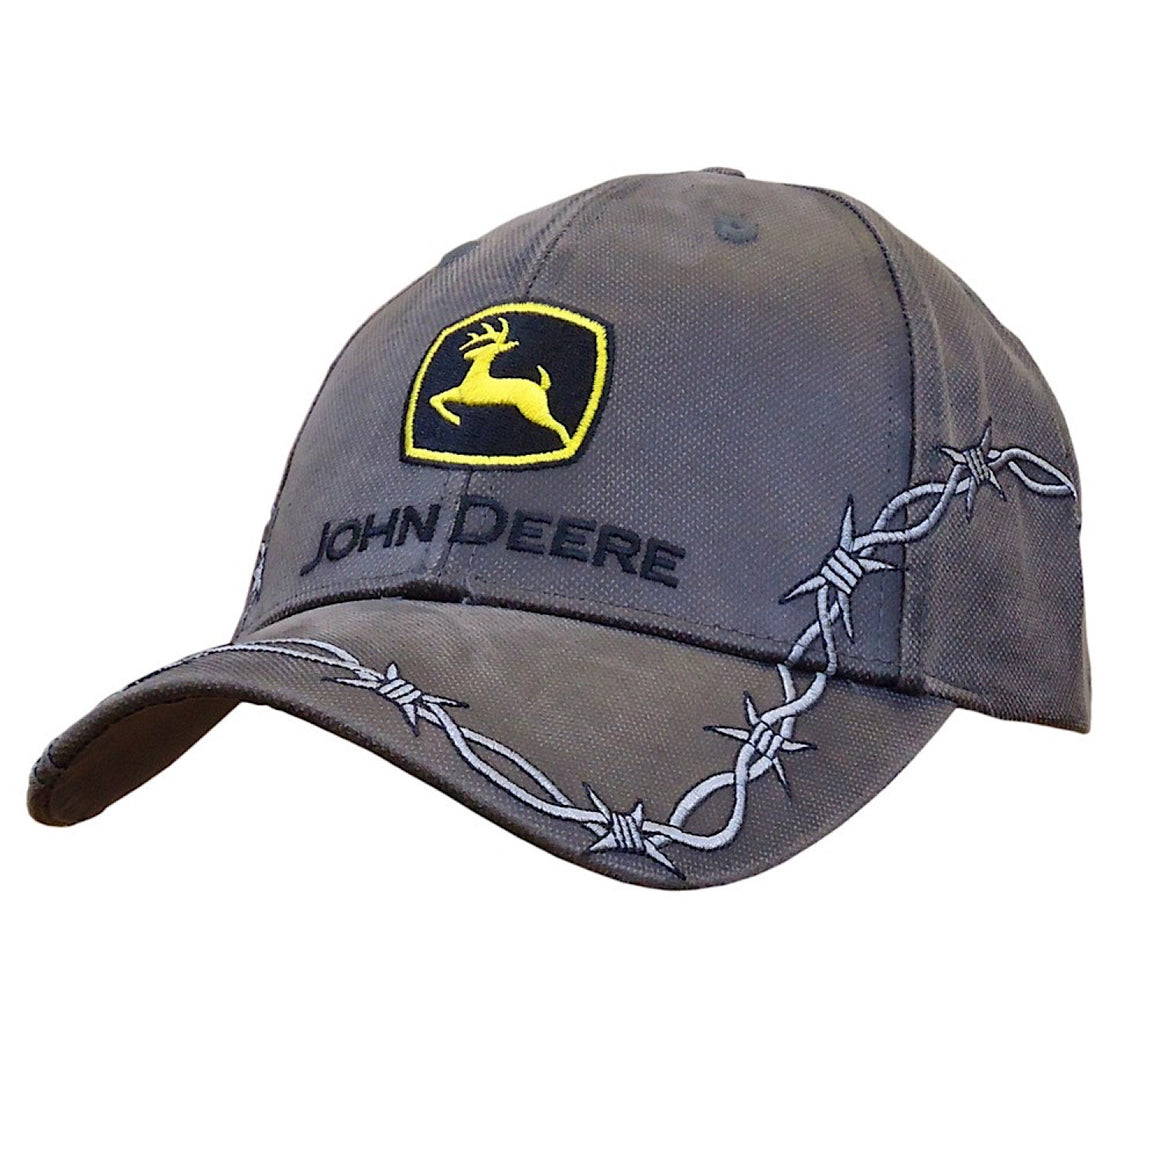 John Deere Oilskin Cap with Construction Logo Charcoal